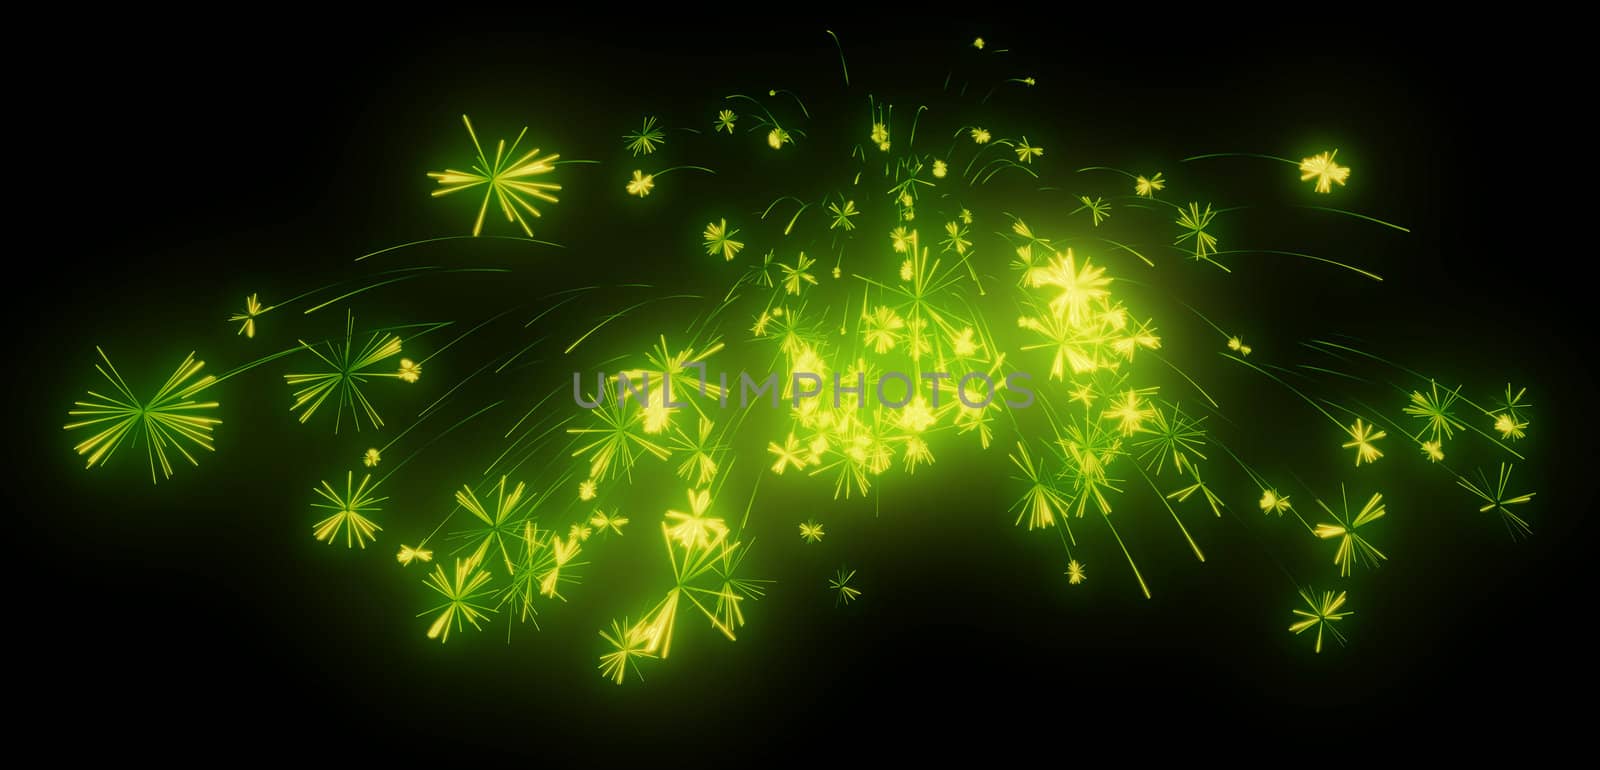 Celebration: green festive fireworks at night over black